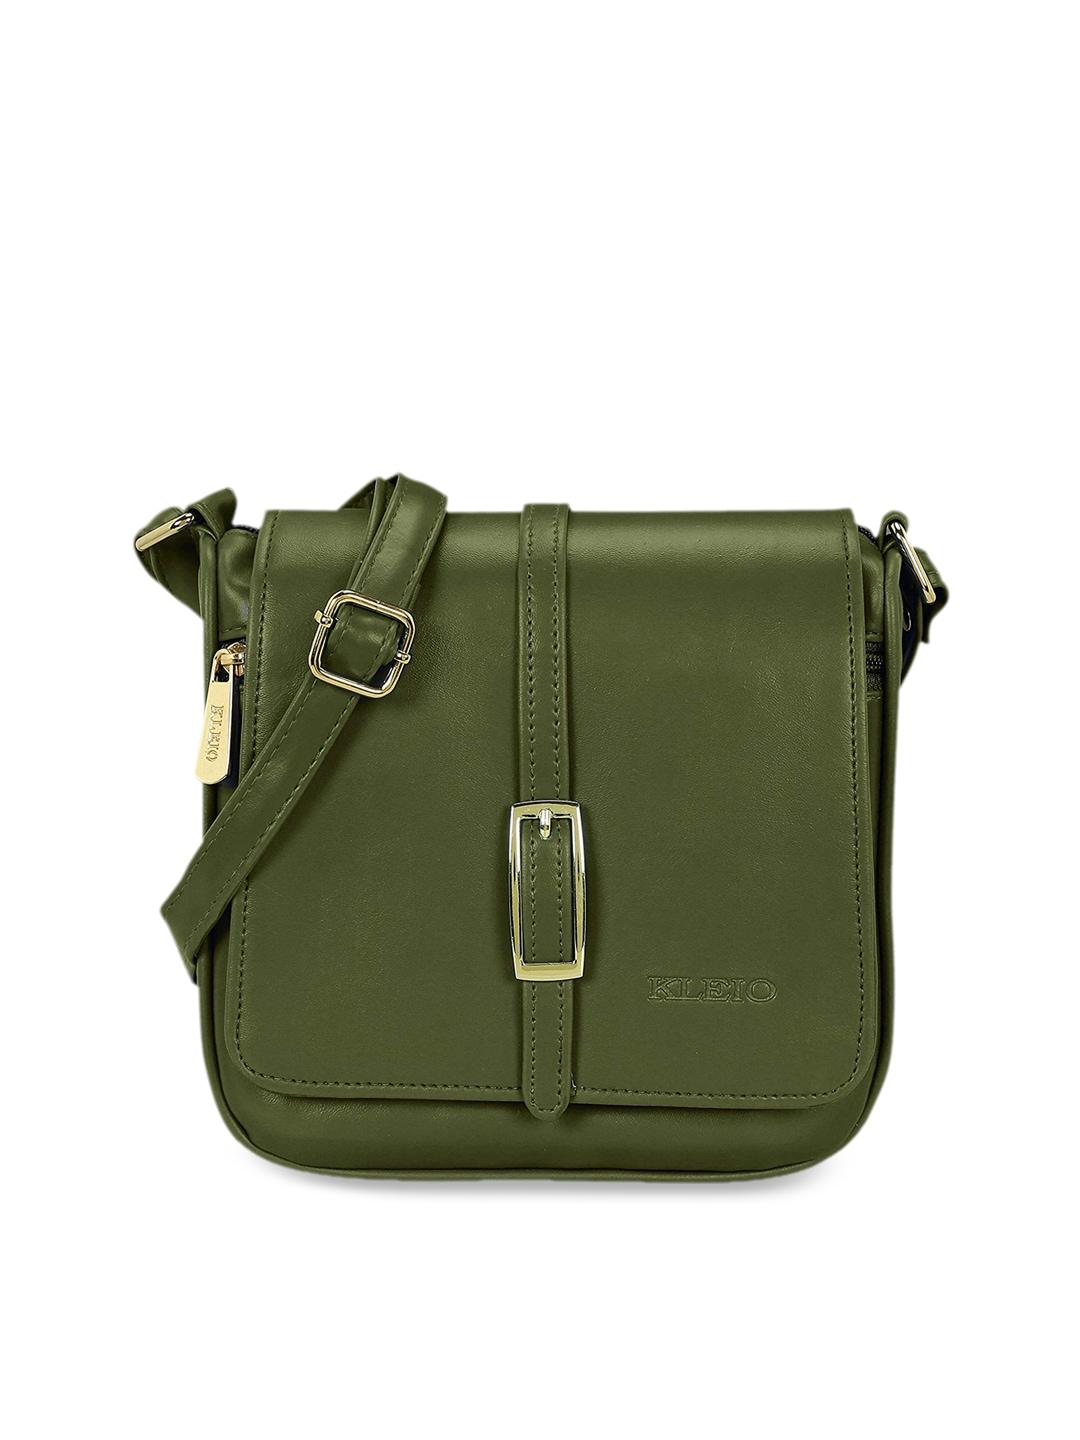 KLEIO Green Solid Sling Bag